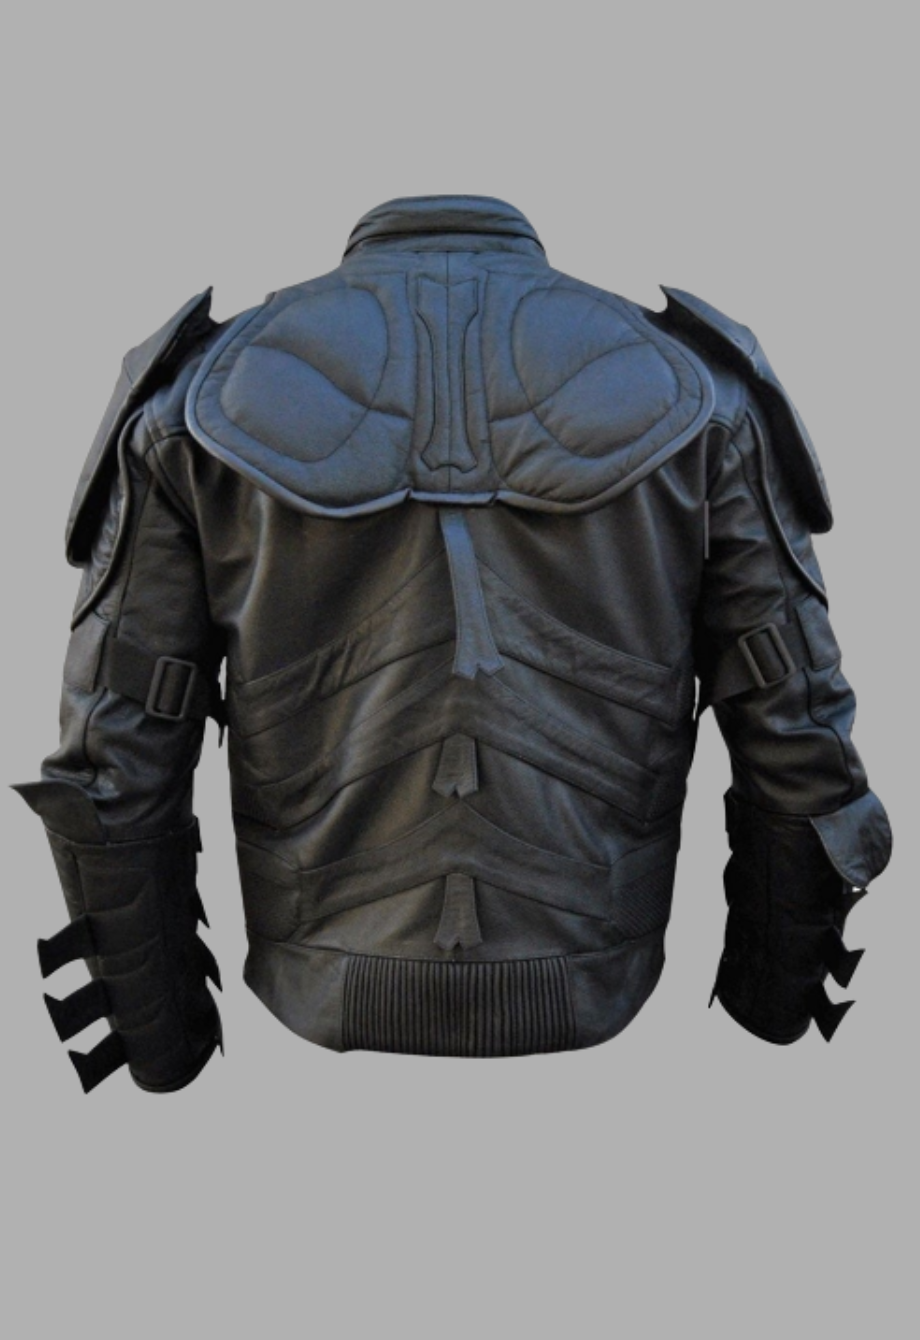 Bat Knight Fashion Racer Cosplay Leather Jacket